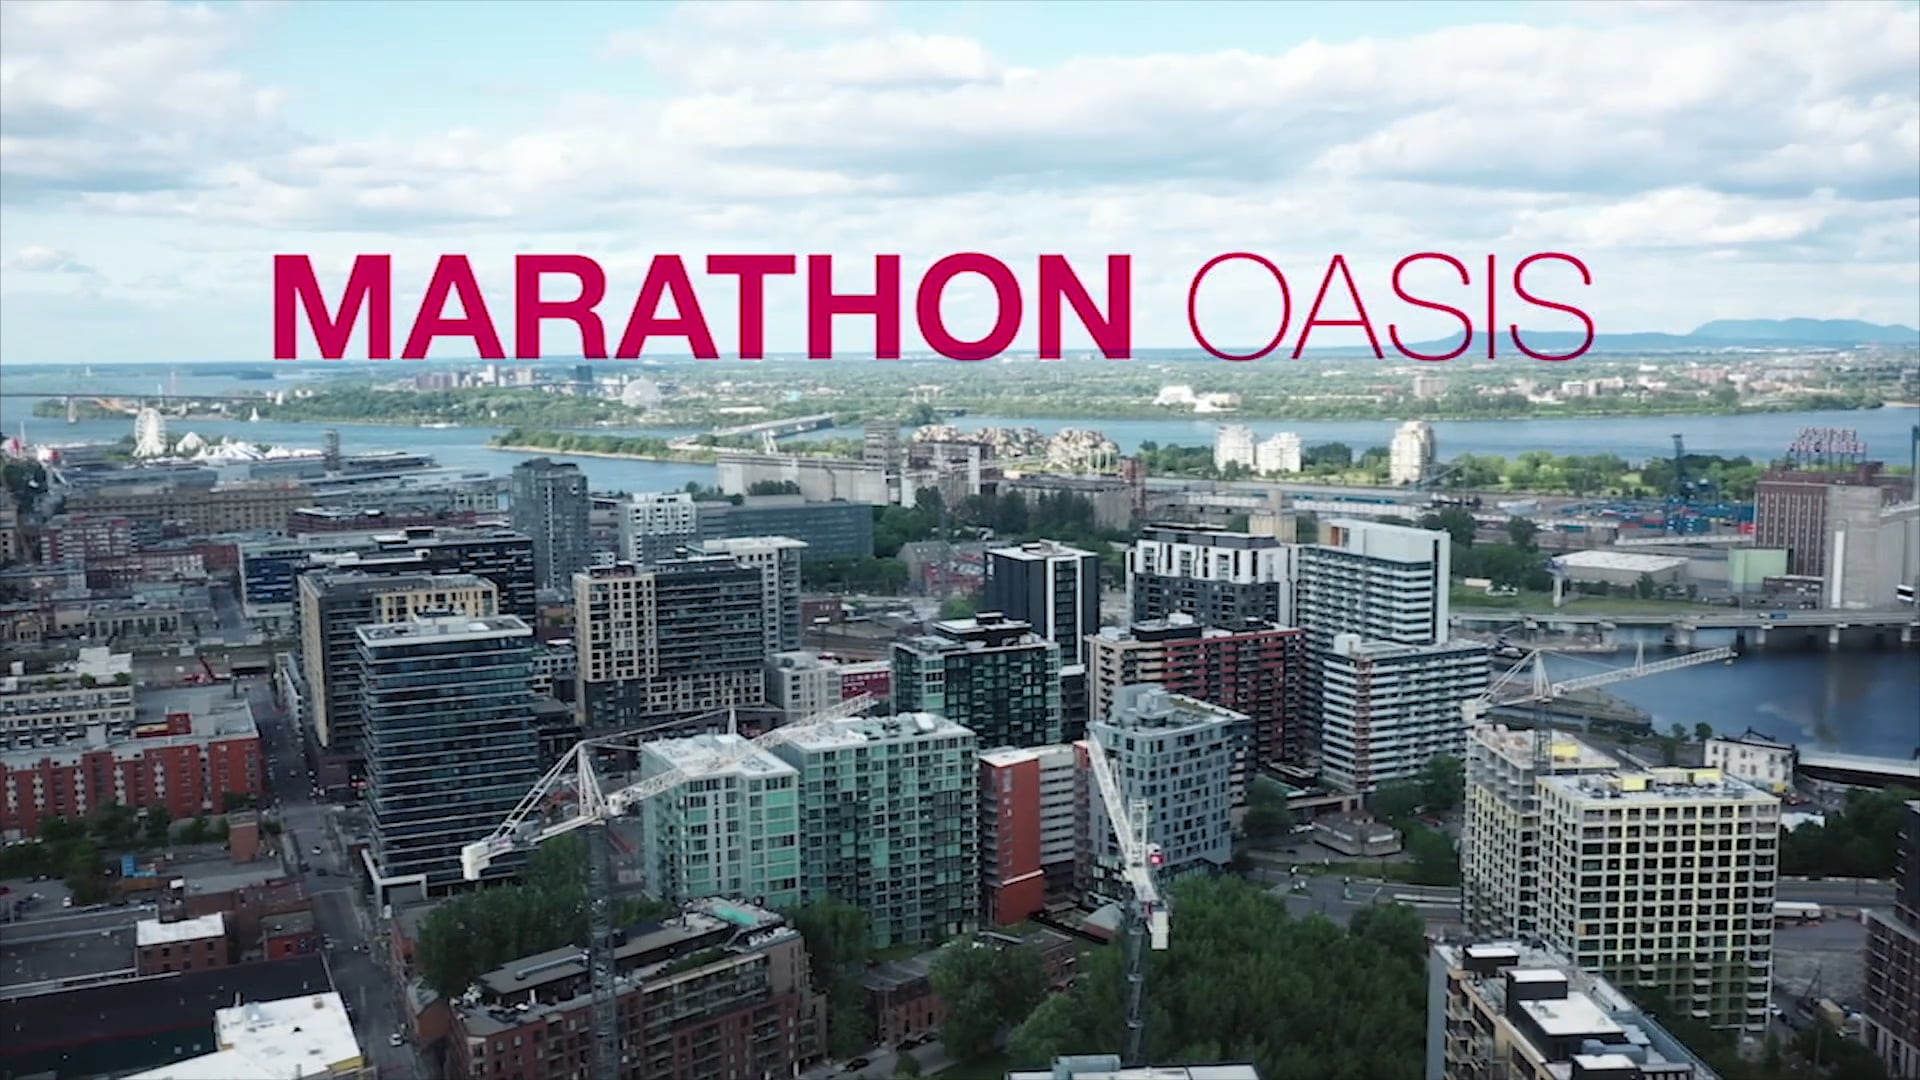 Marathon Oasis - Insight Canada